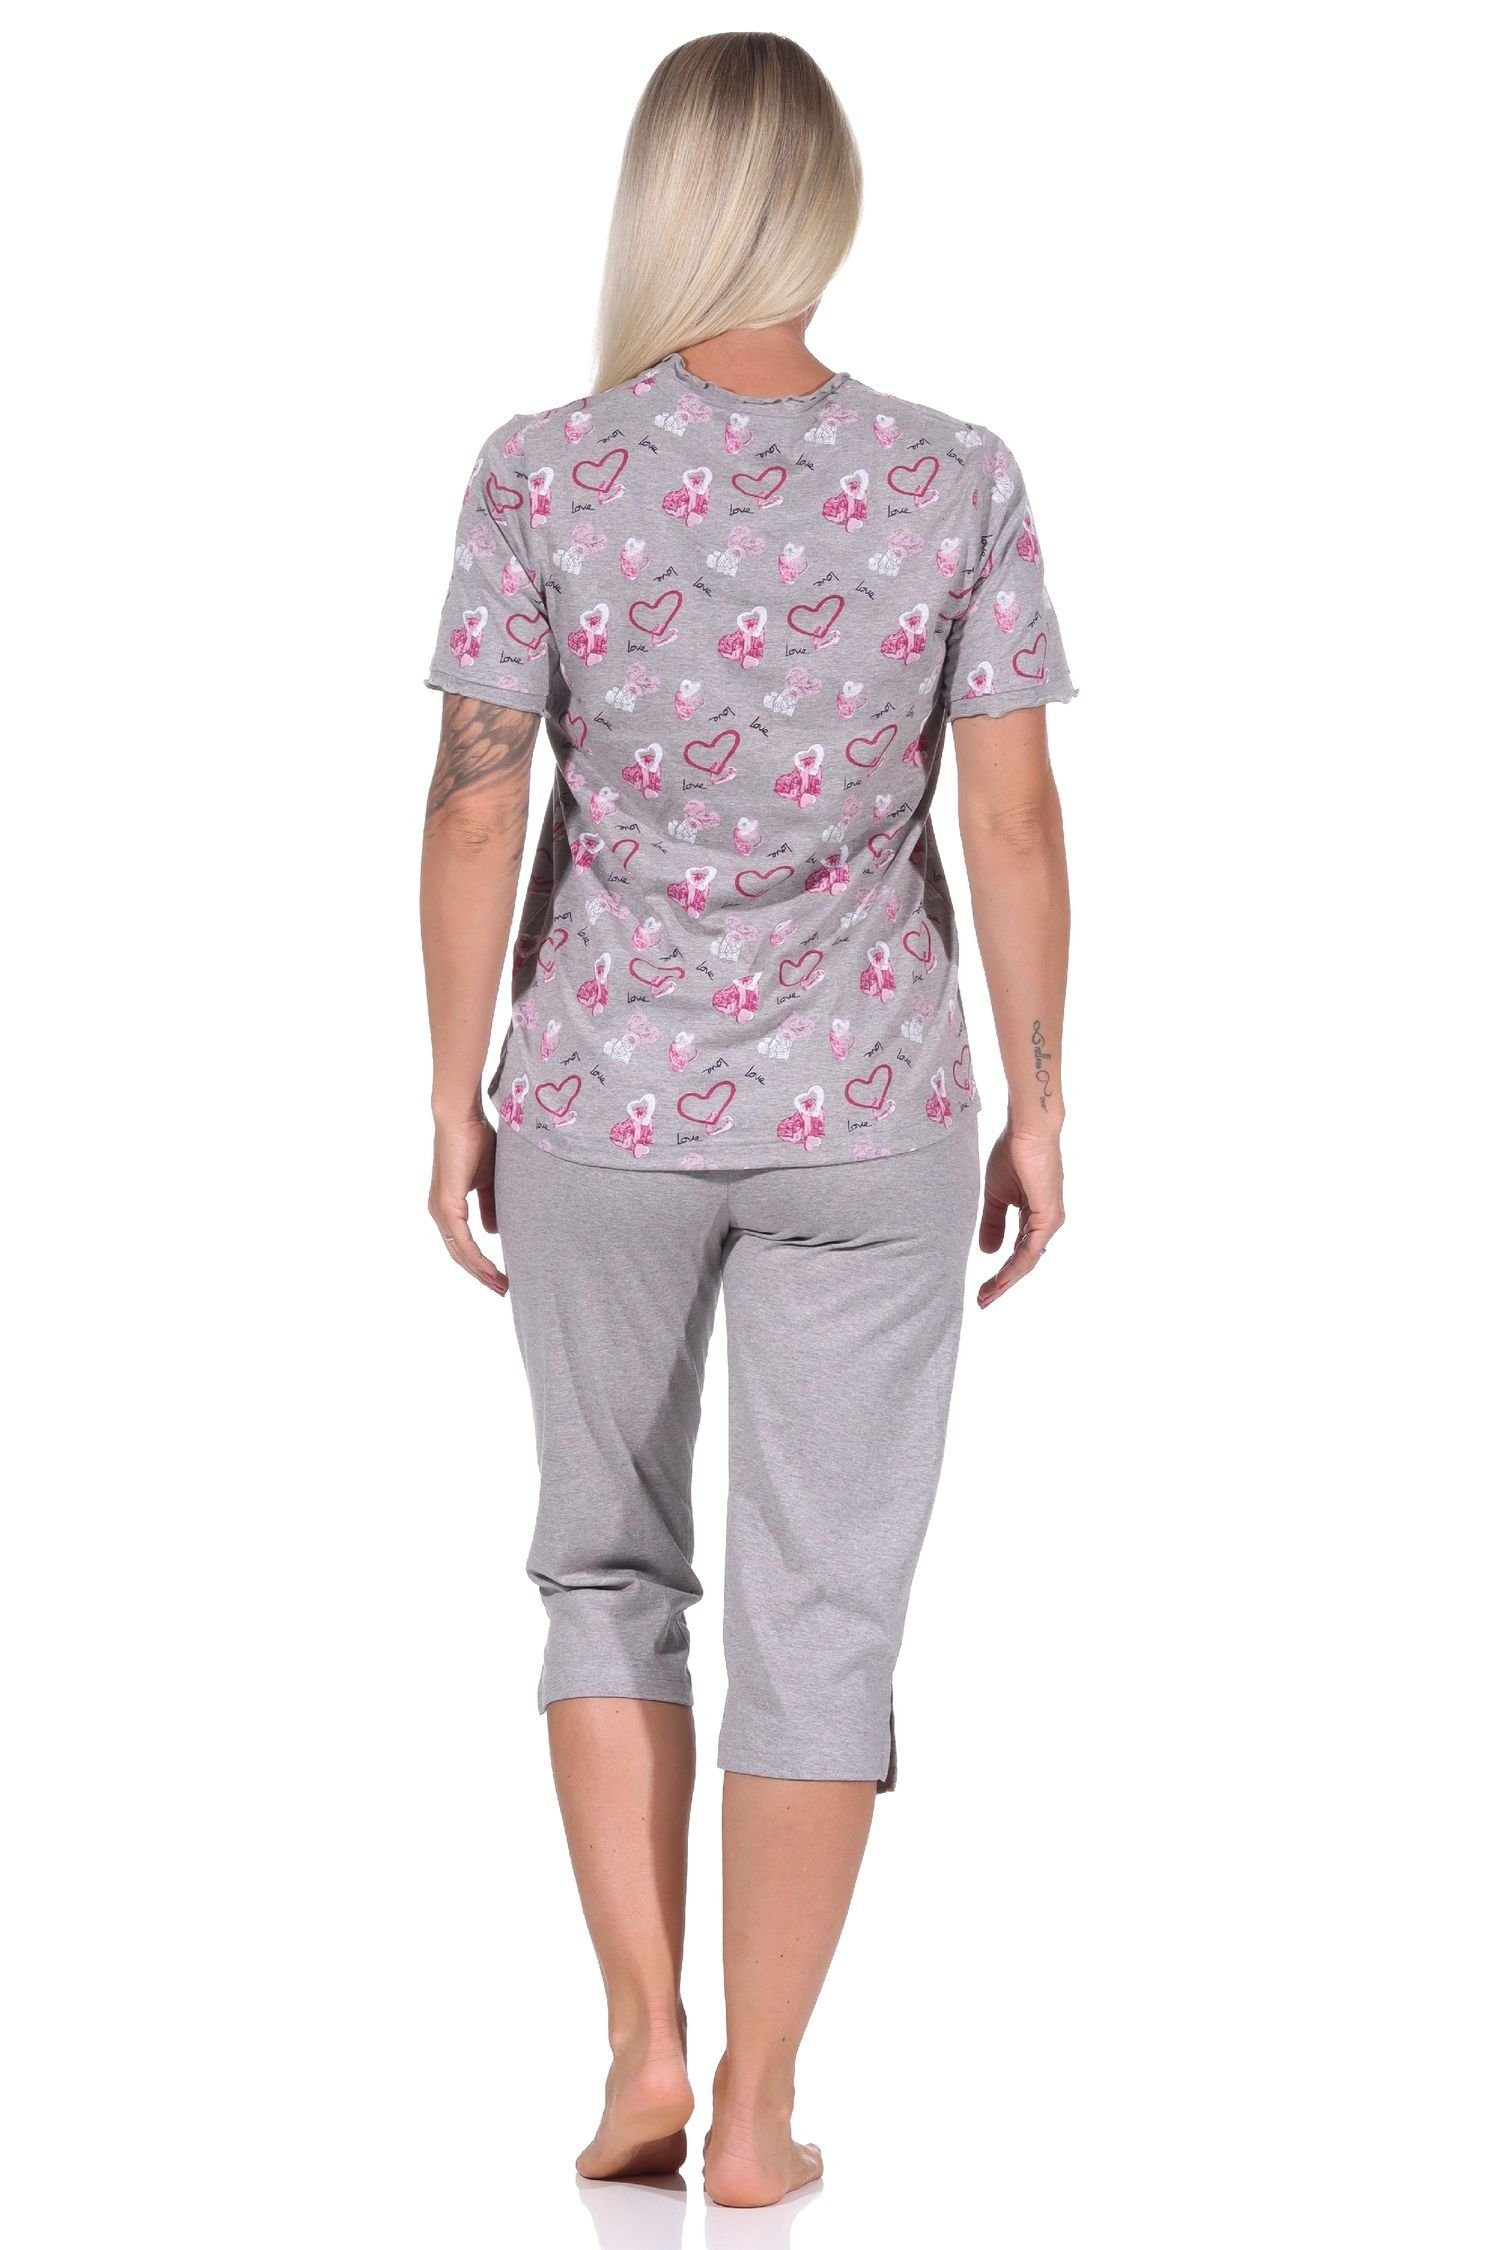 Normann Pyjama Damen kurzarm Übergrößen Schlafanzug in in grau-melange Herz auch Capri Optik 